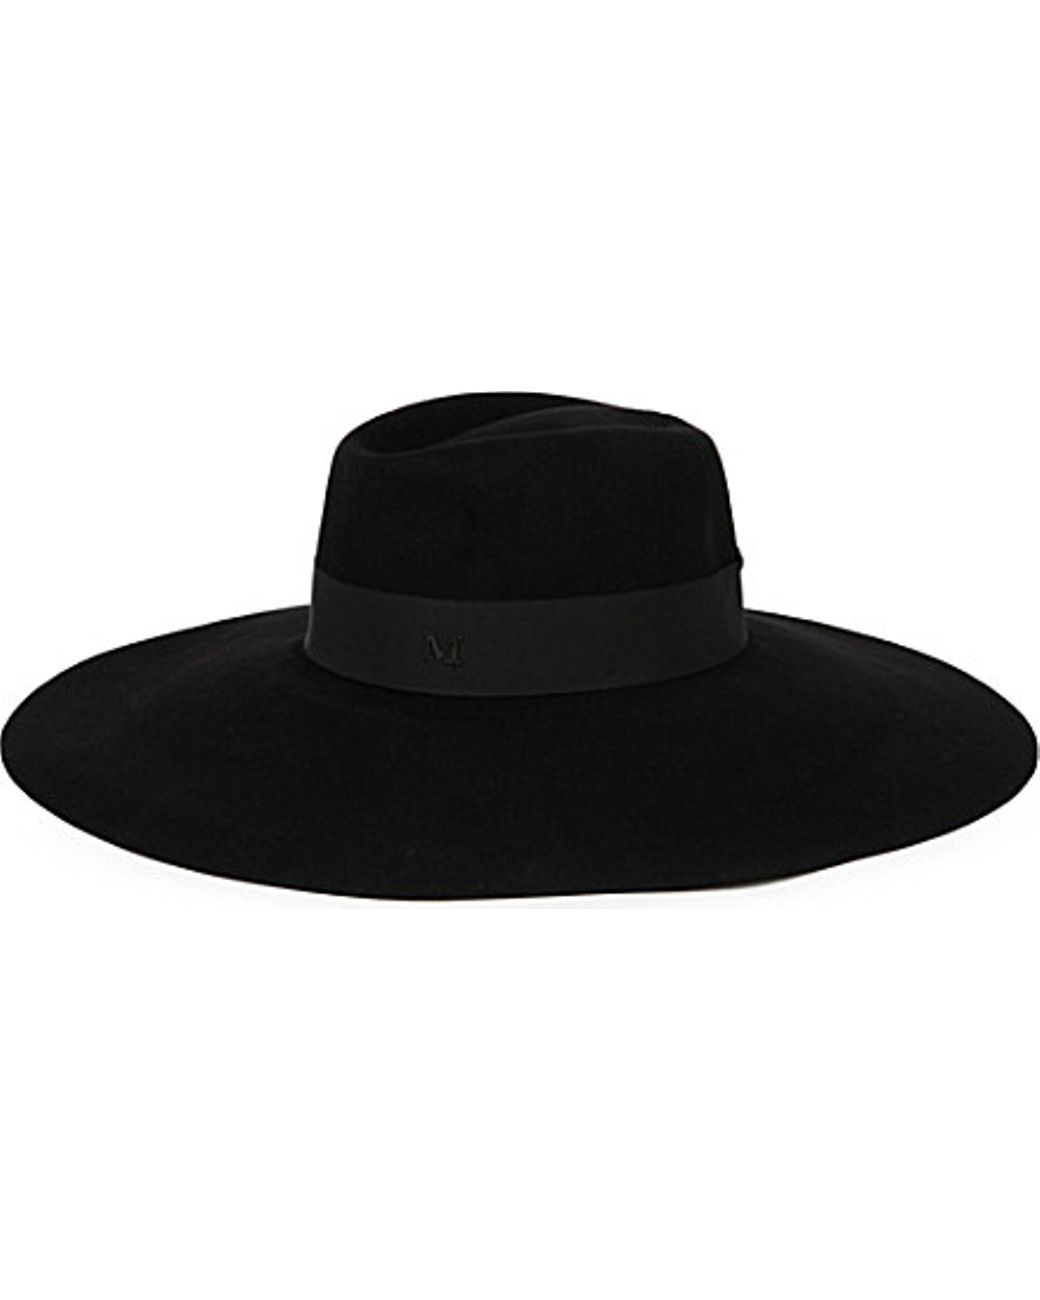 Maison Michel Fara Wide-brimmed Felt Fedora Hat in Black | Lyst